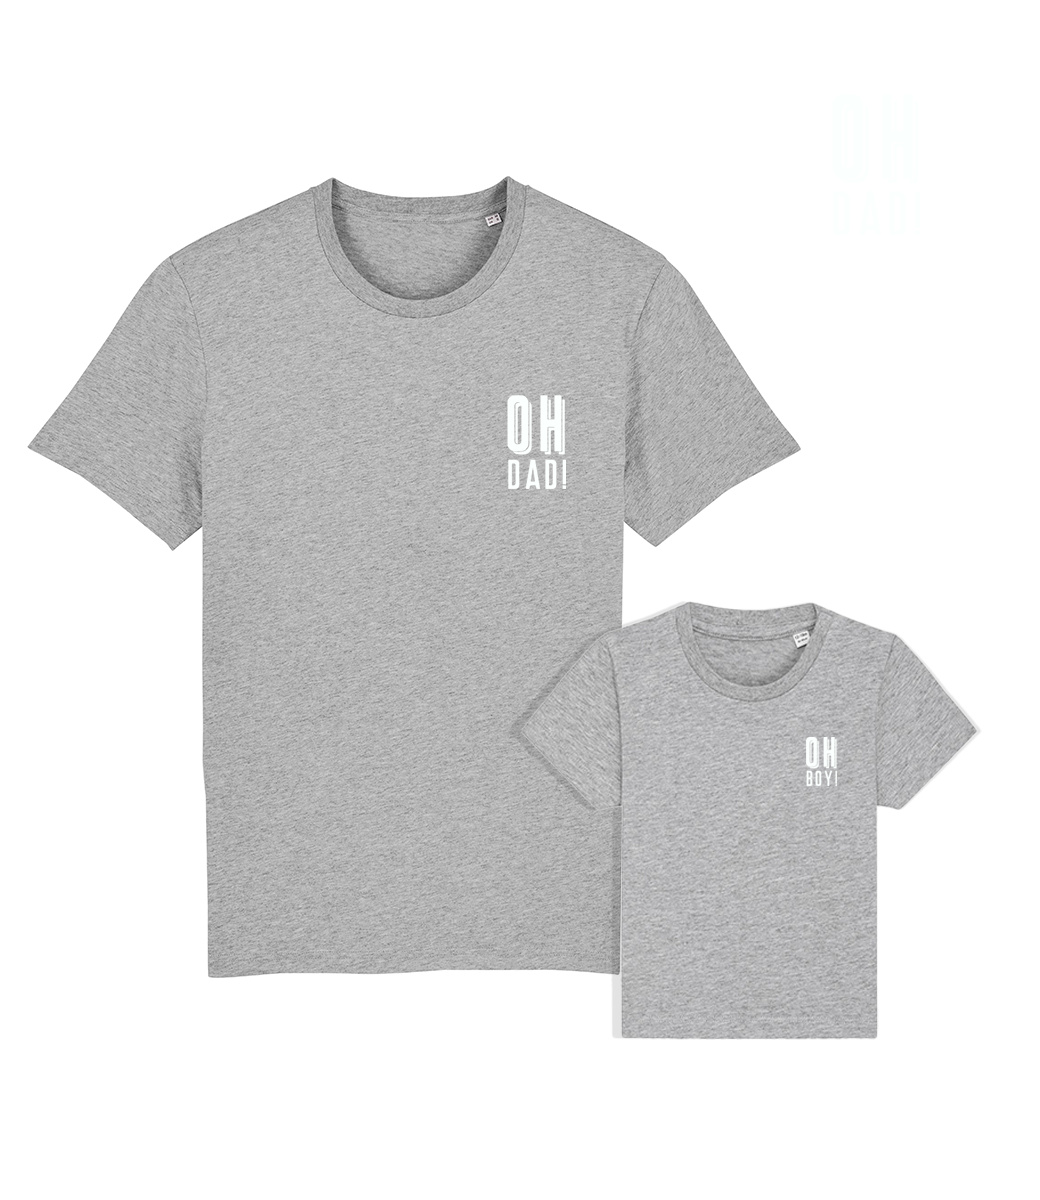 Organic matching t-shirt set // OH dad! OH Boy!